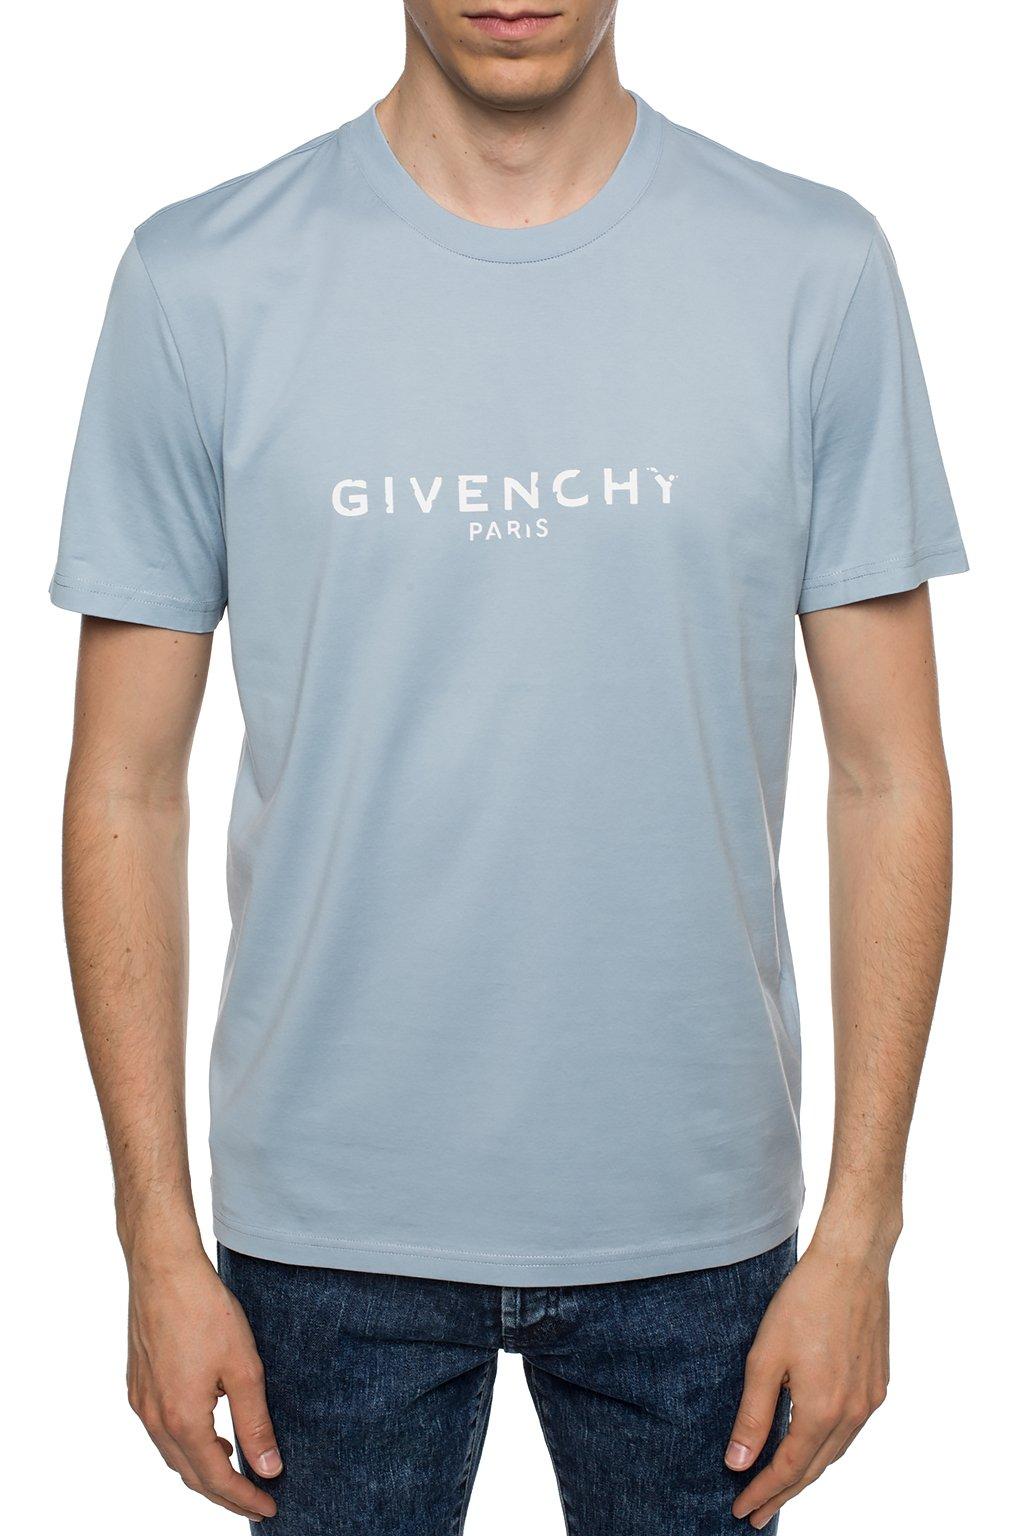 givenchy light blue t shirt